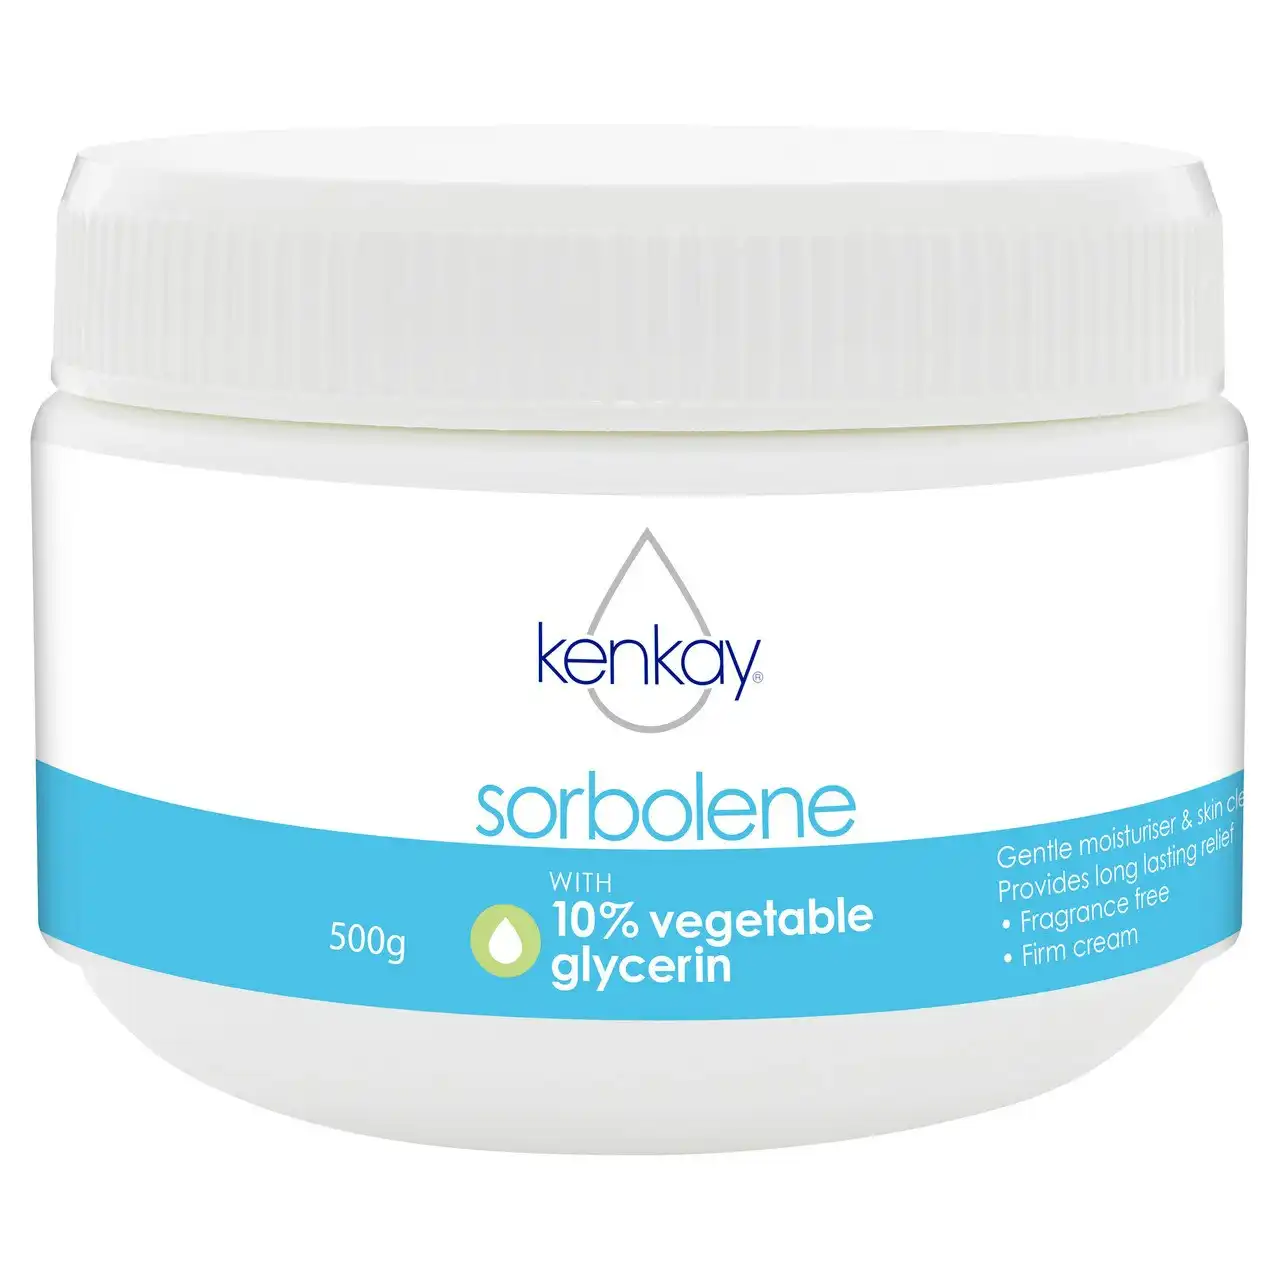 Kenkay Sorbolene With 10% Vegetable Glycerin 500g